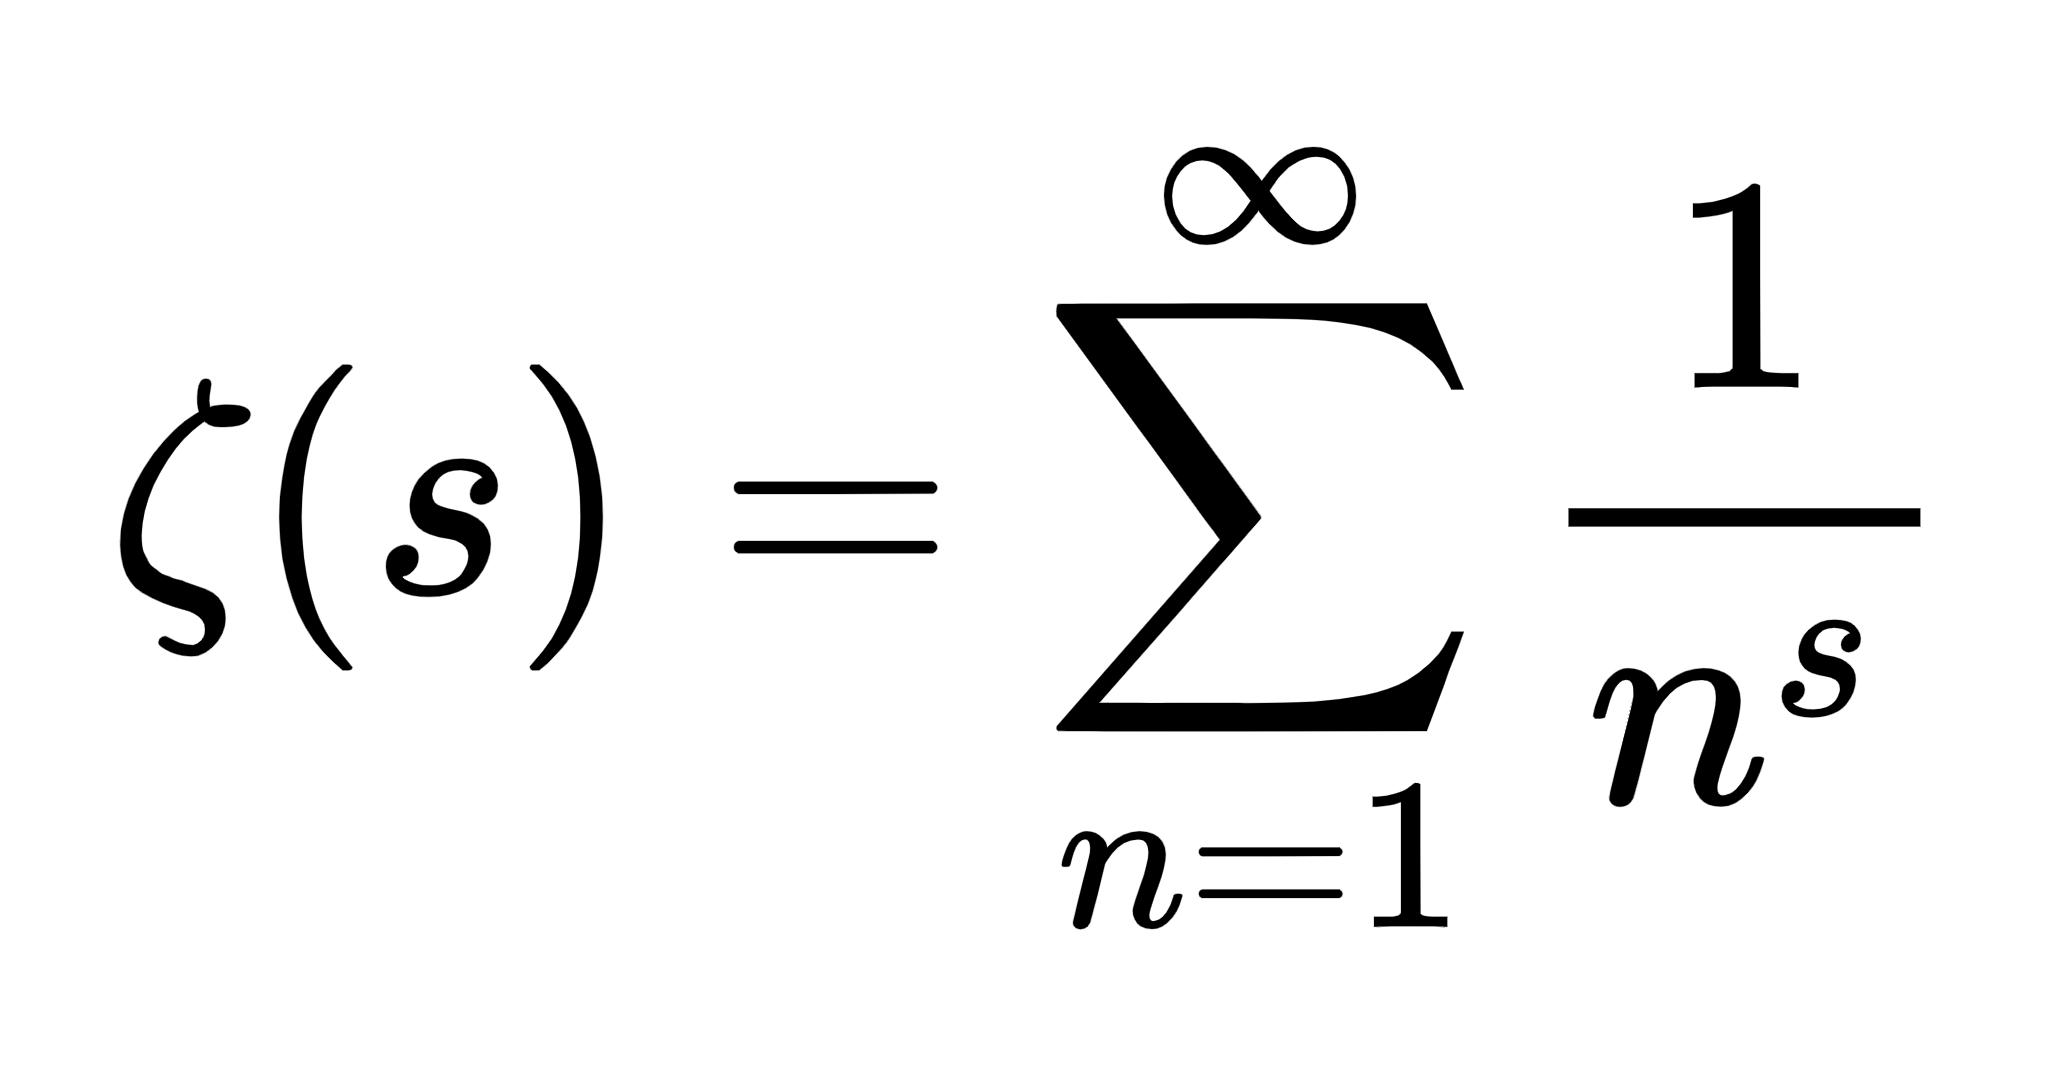 riemann hypothesis formula